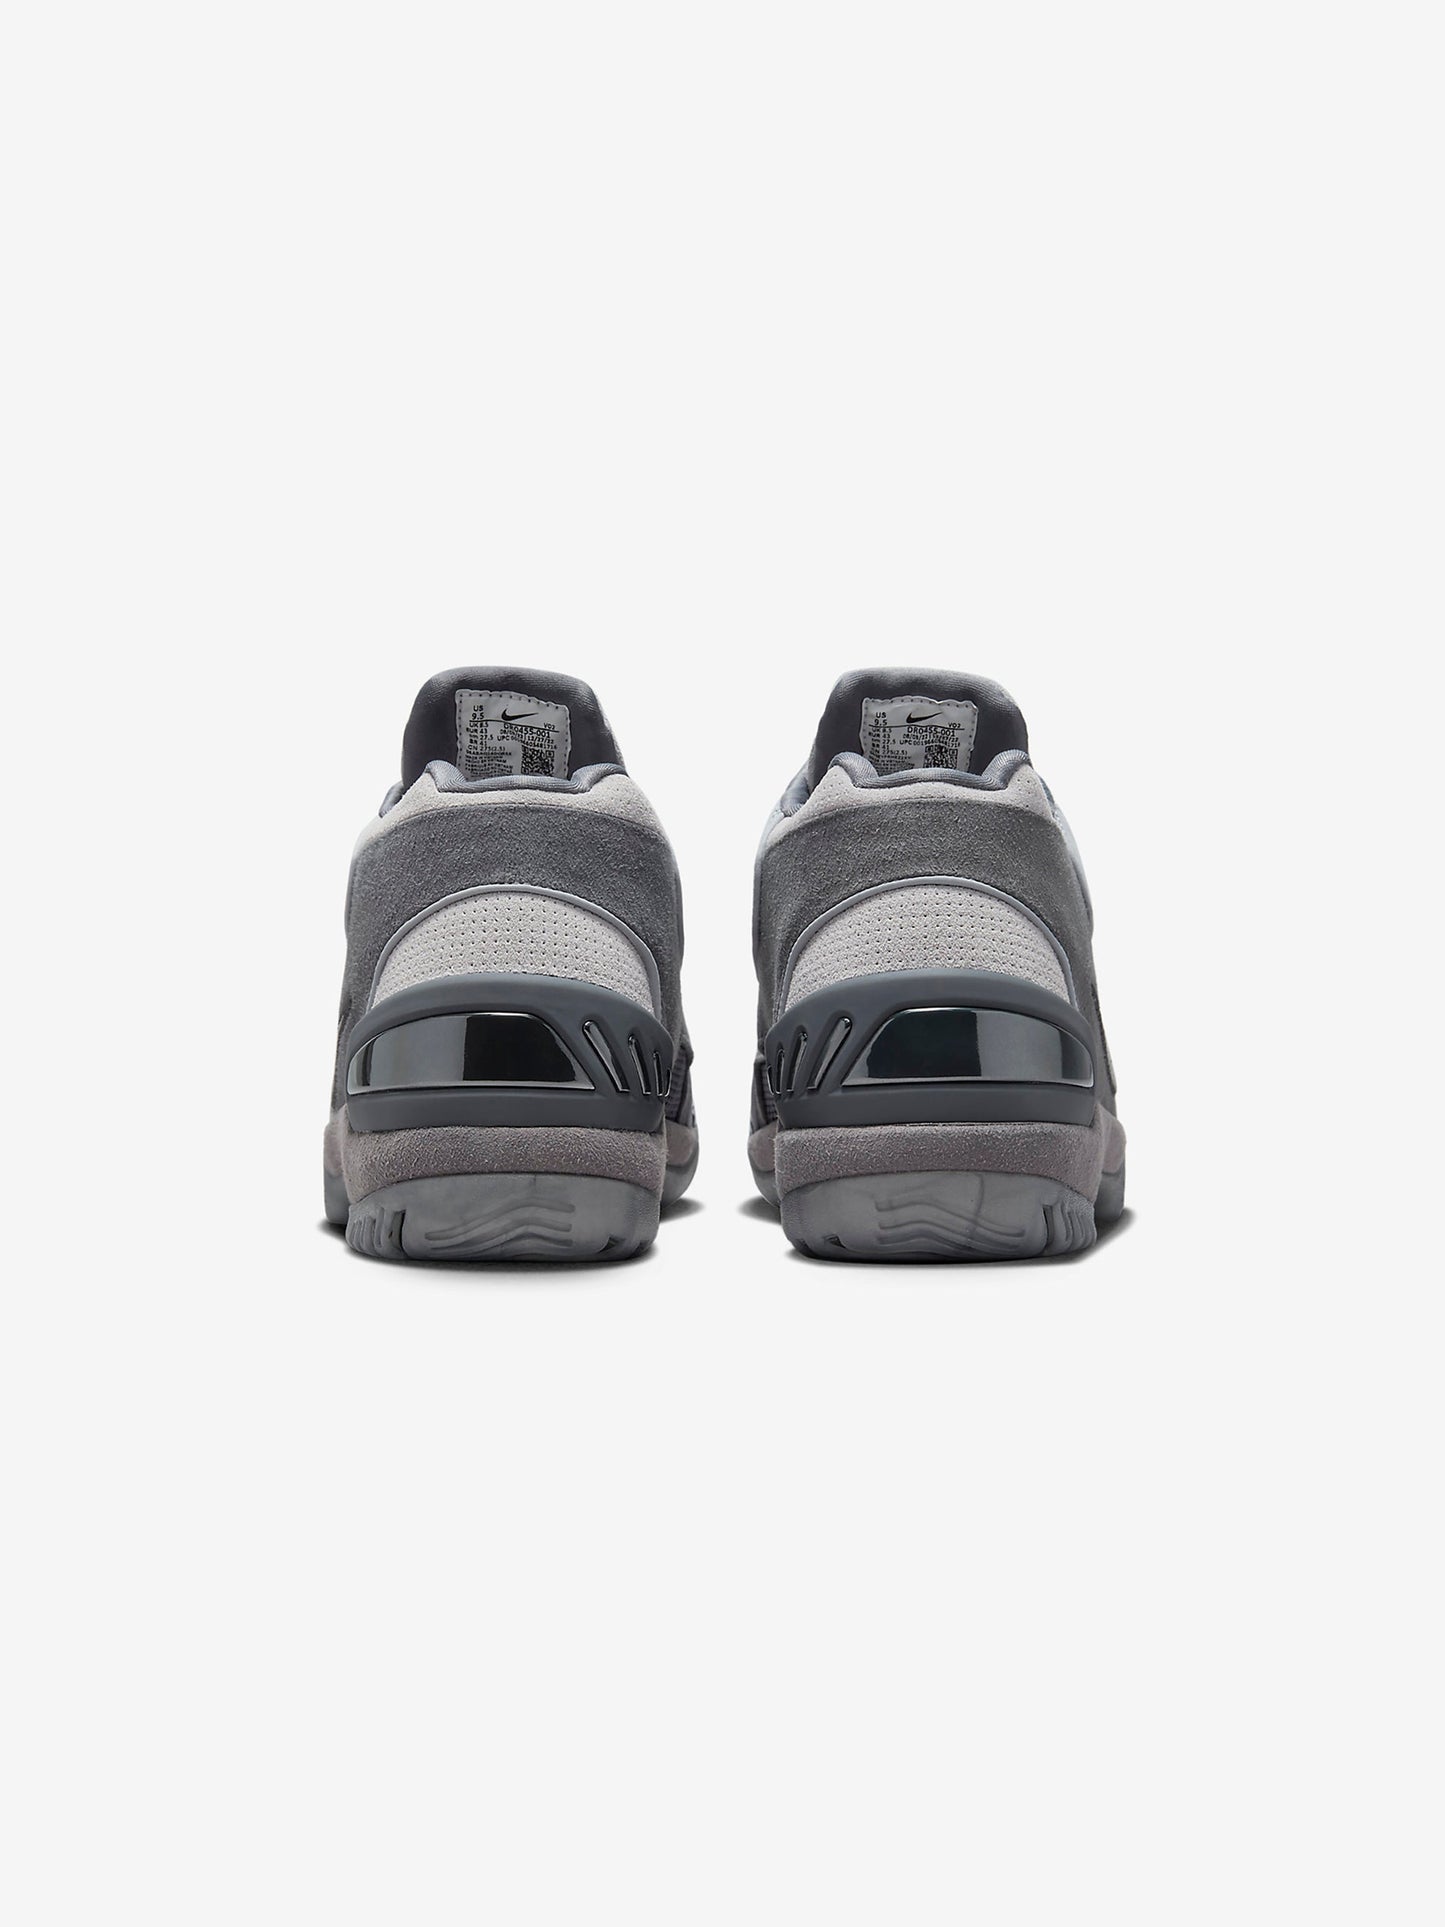 Nike Air Zoom Generation (Dark Grey/Wolf Grey-Anthracite)